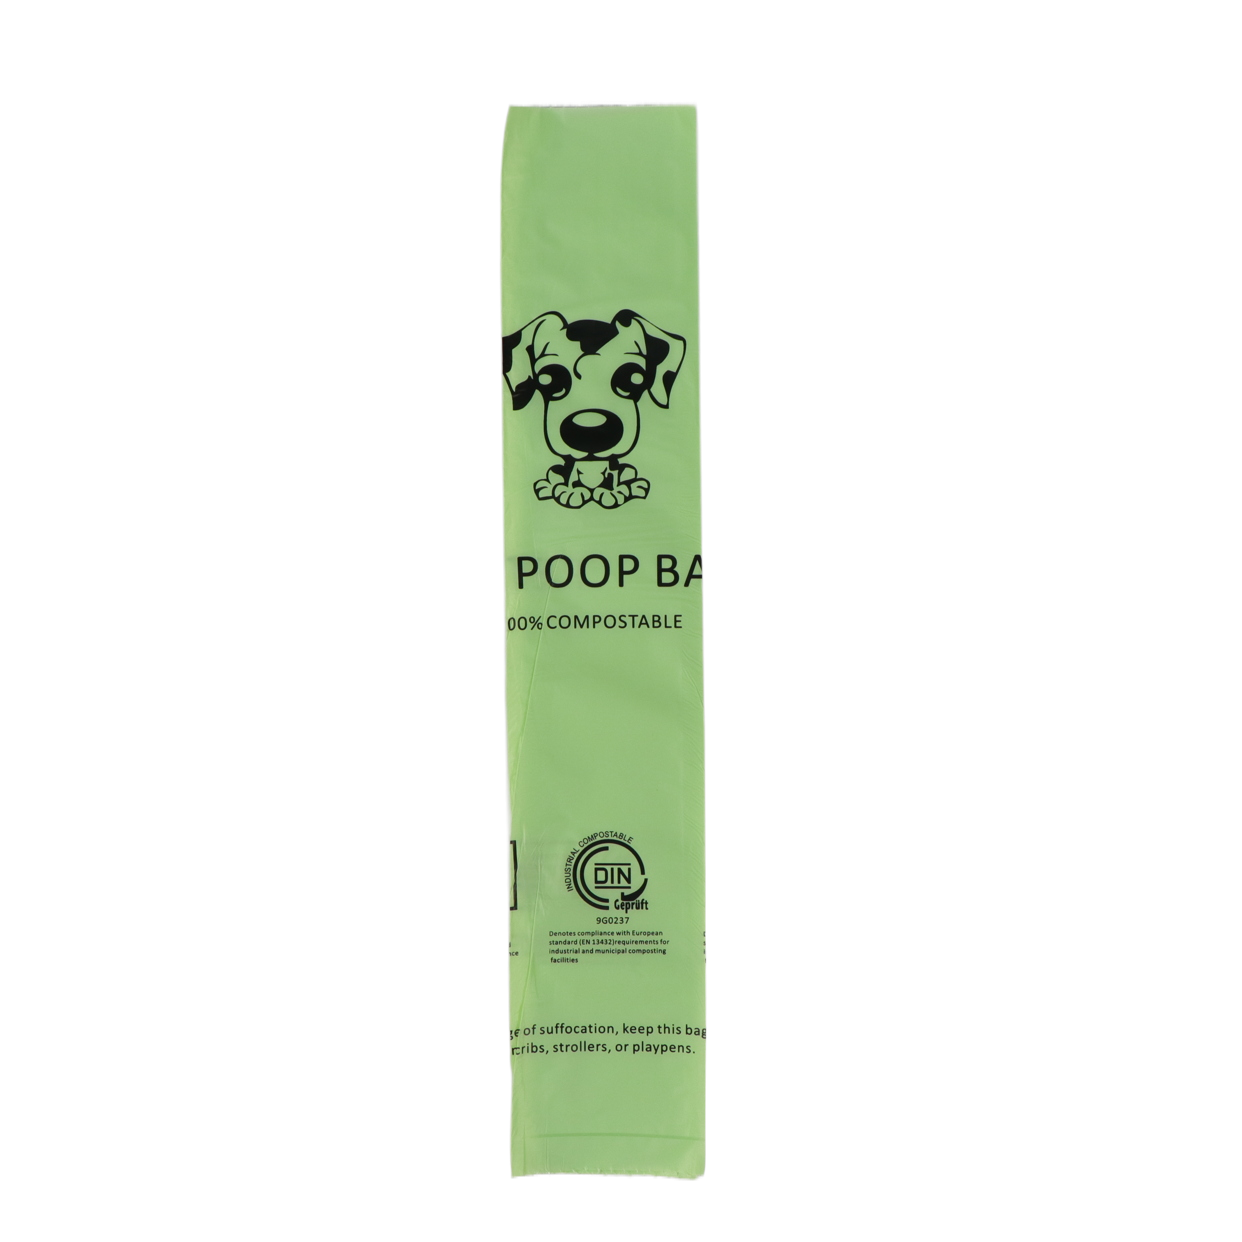 Emerald Green Flat Series Biodegradable Dog Bag